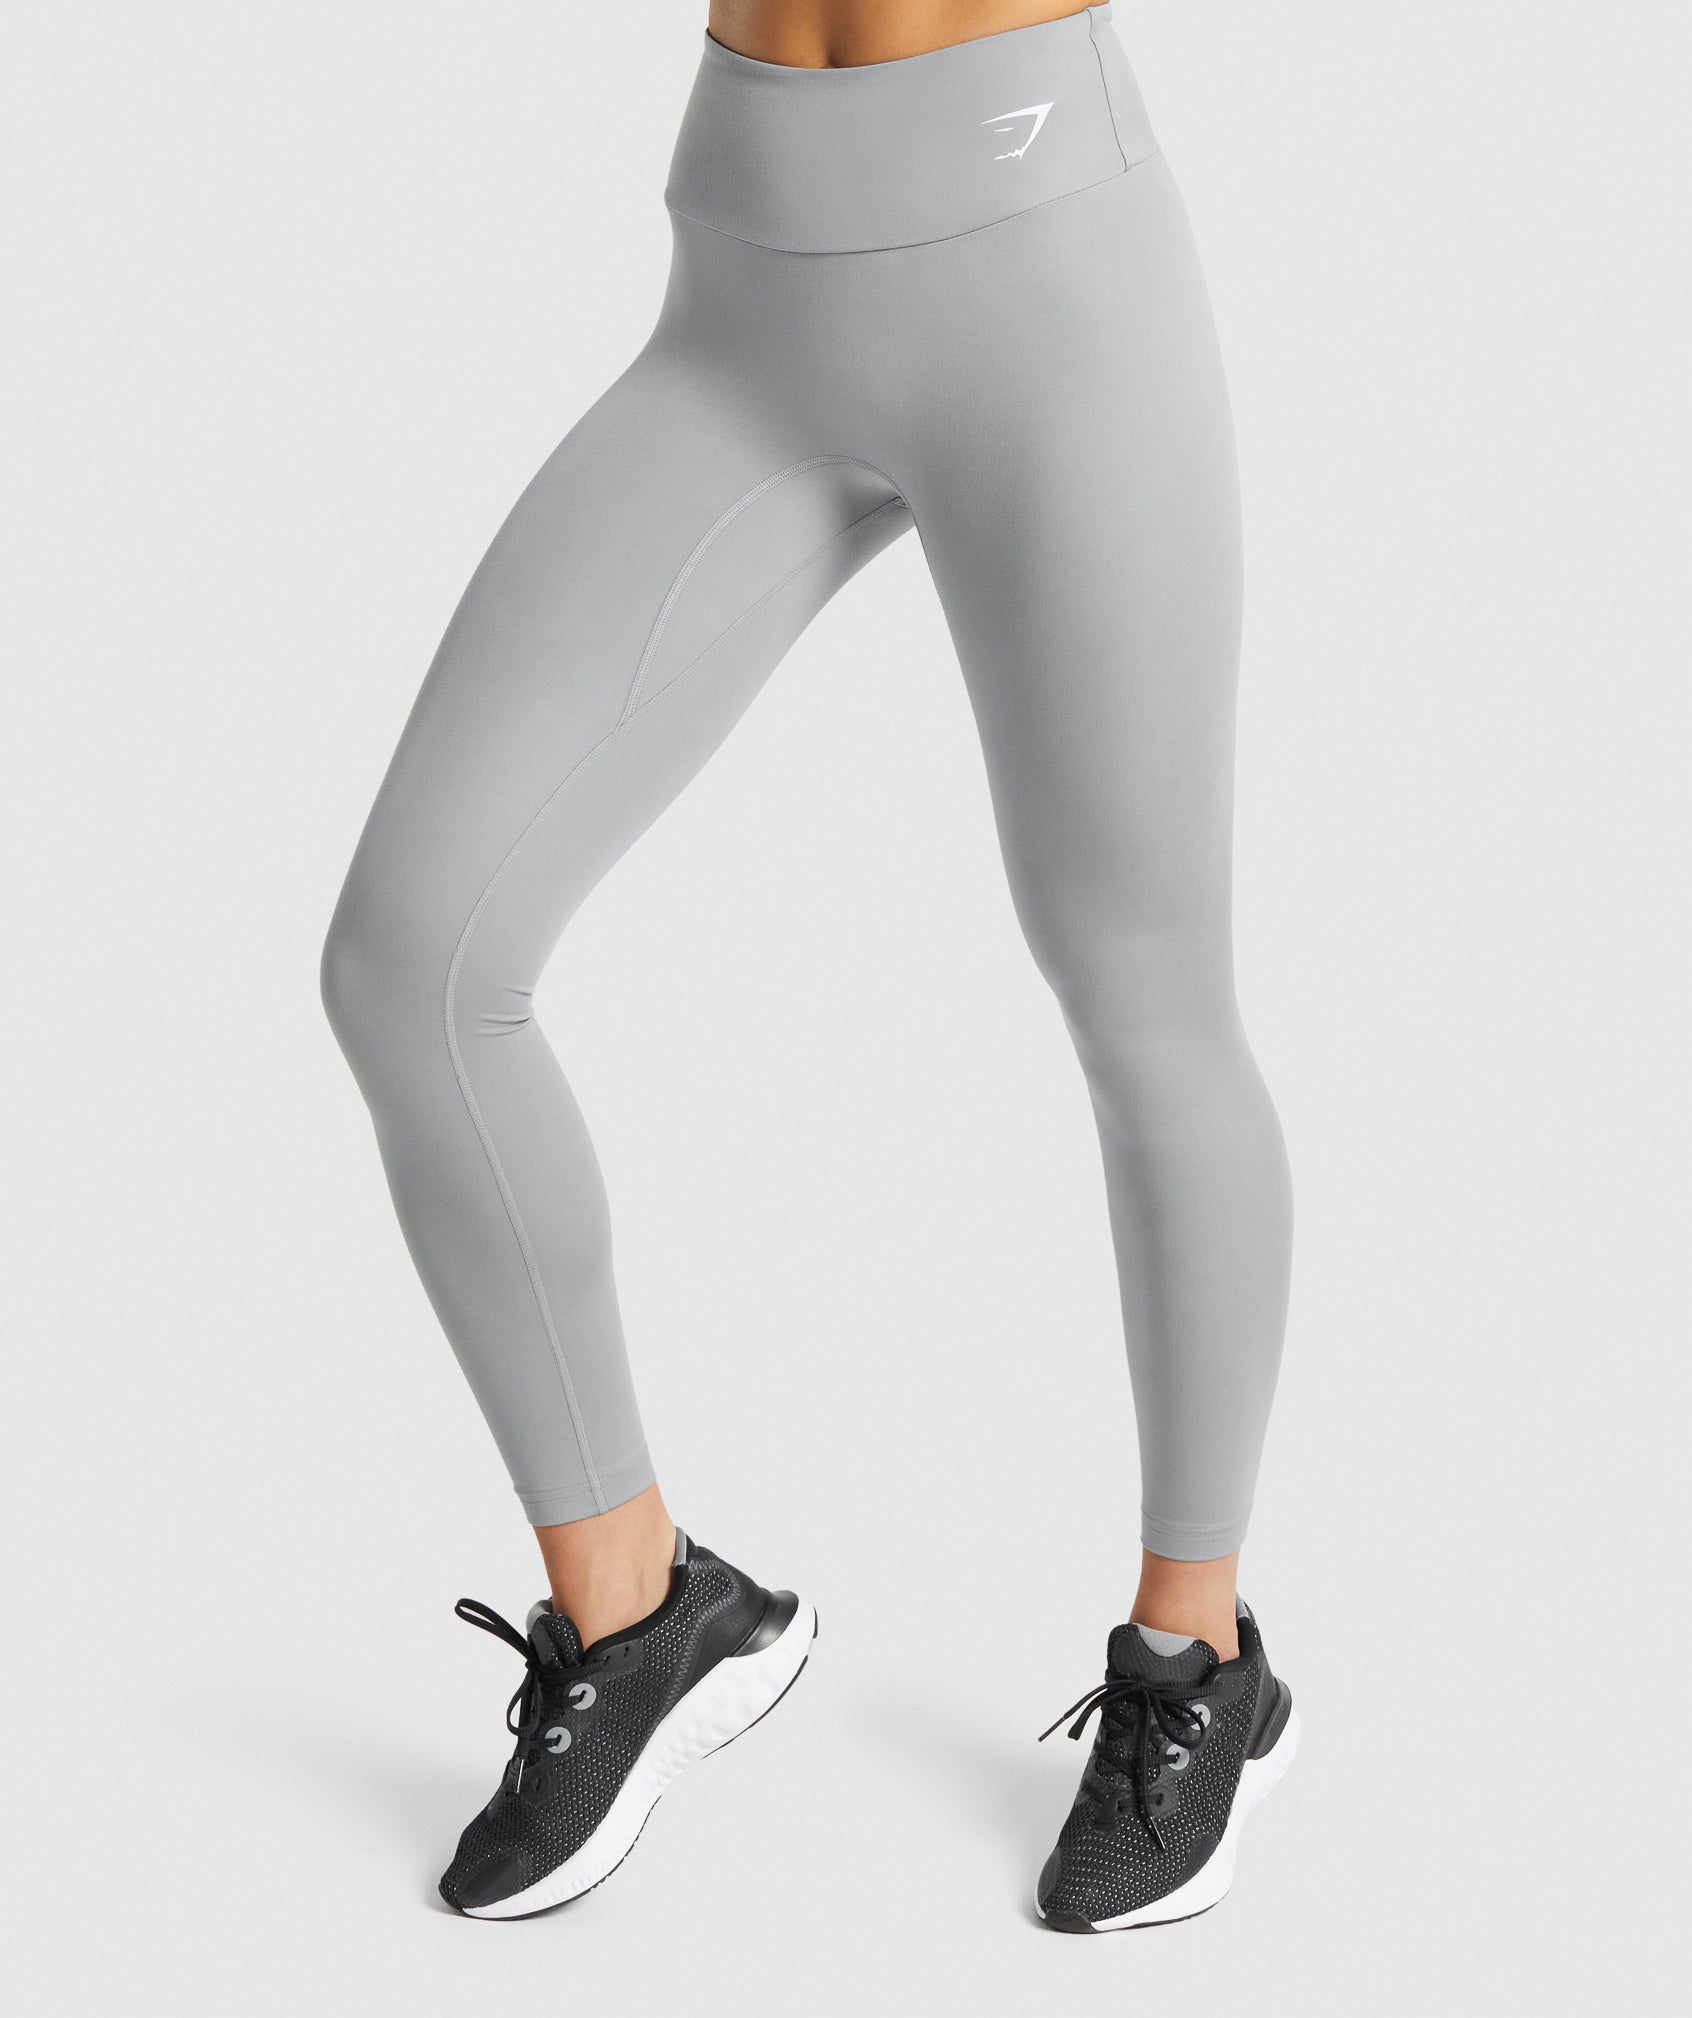 Women's Grey Sale Workout Leggings